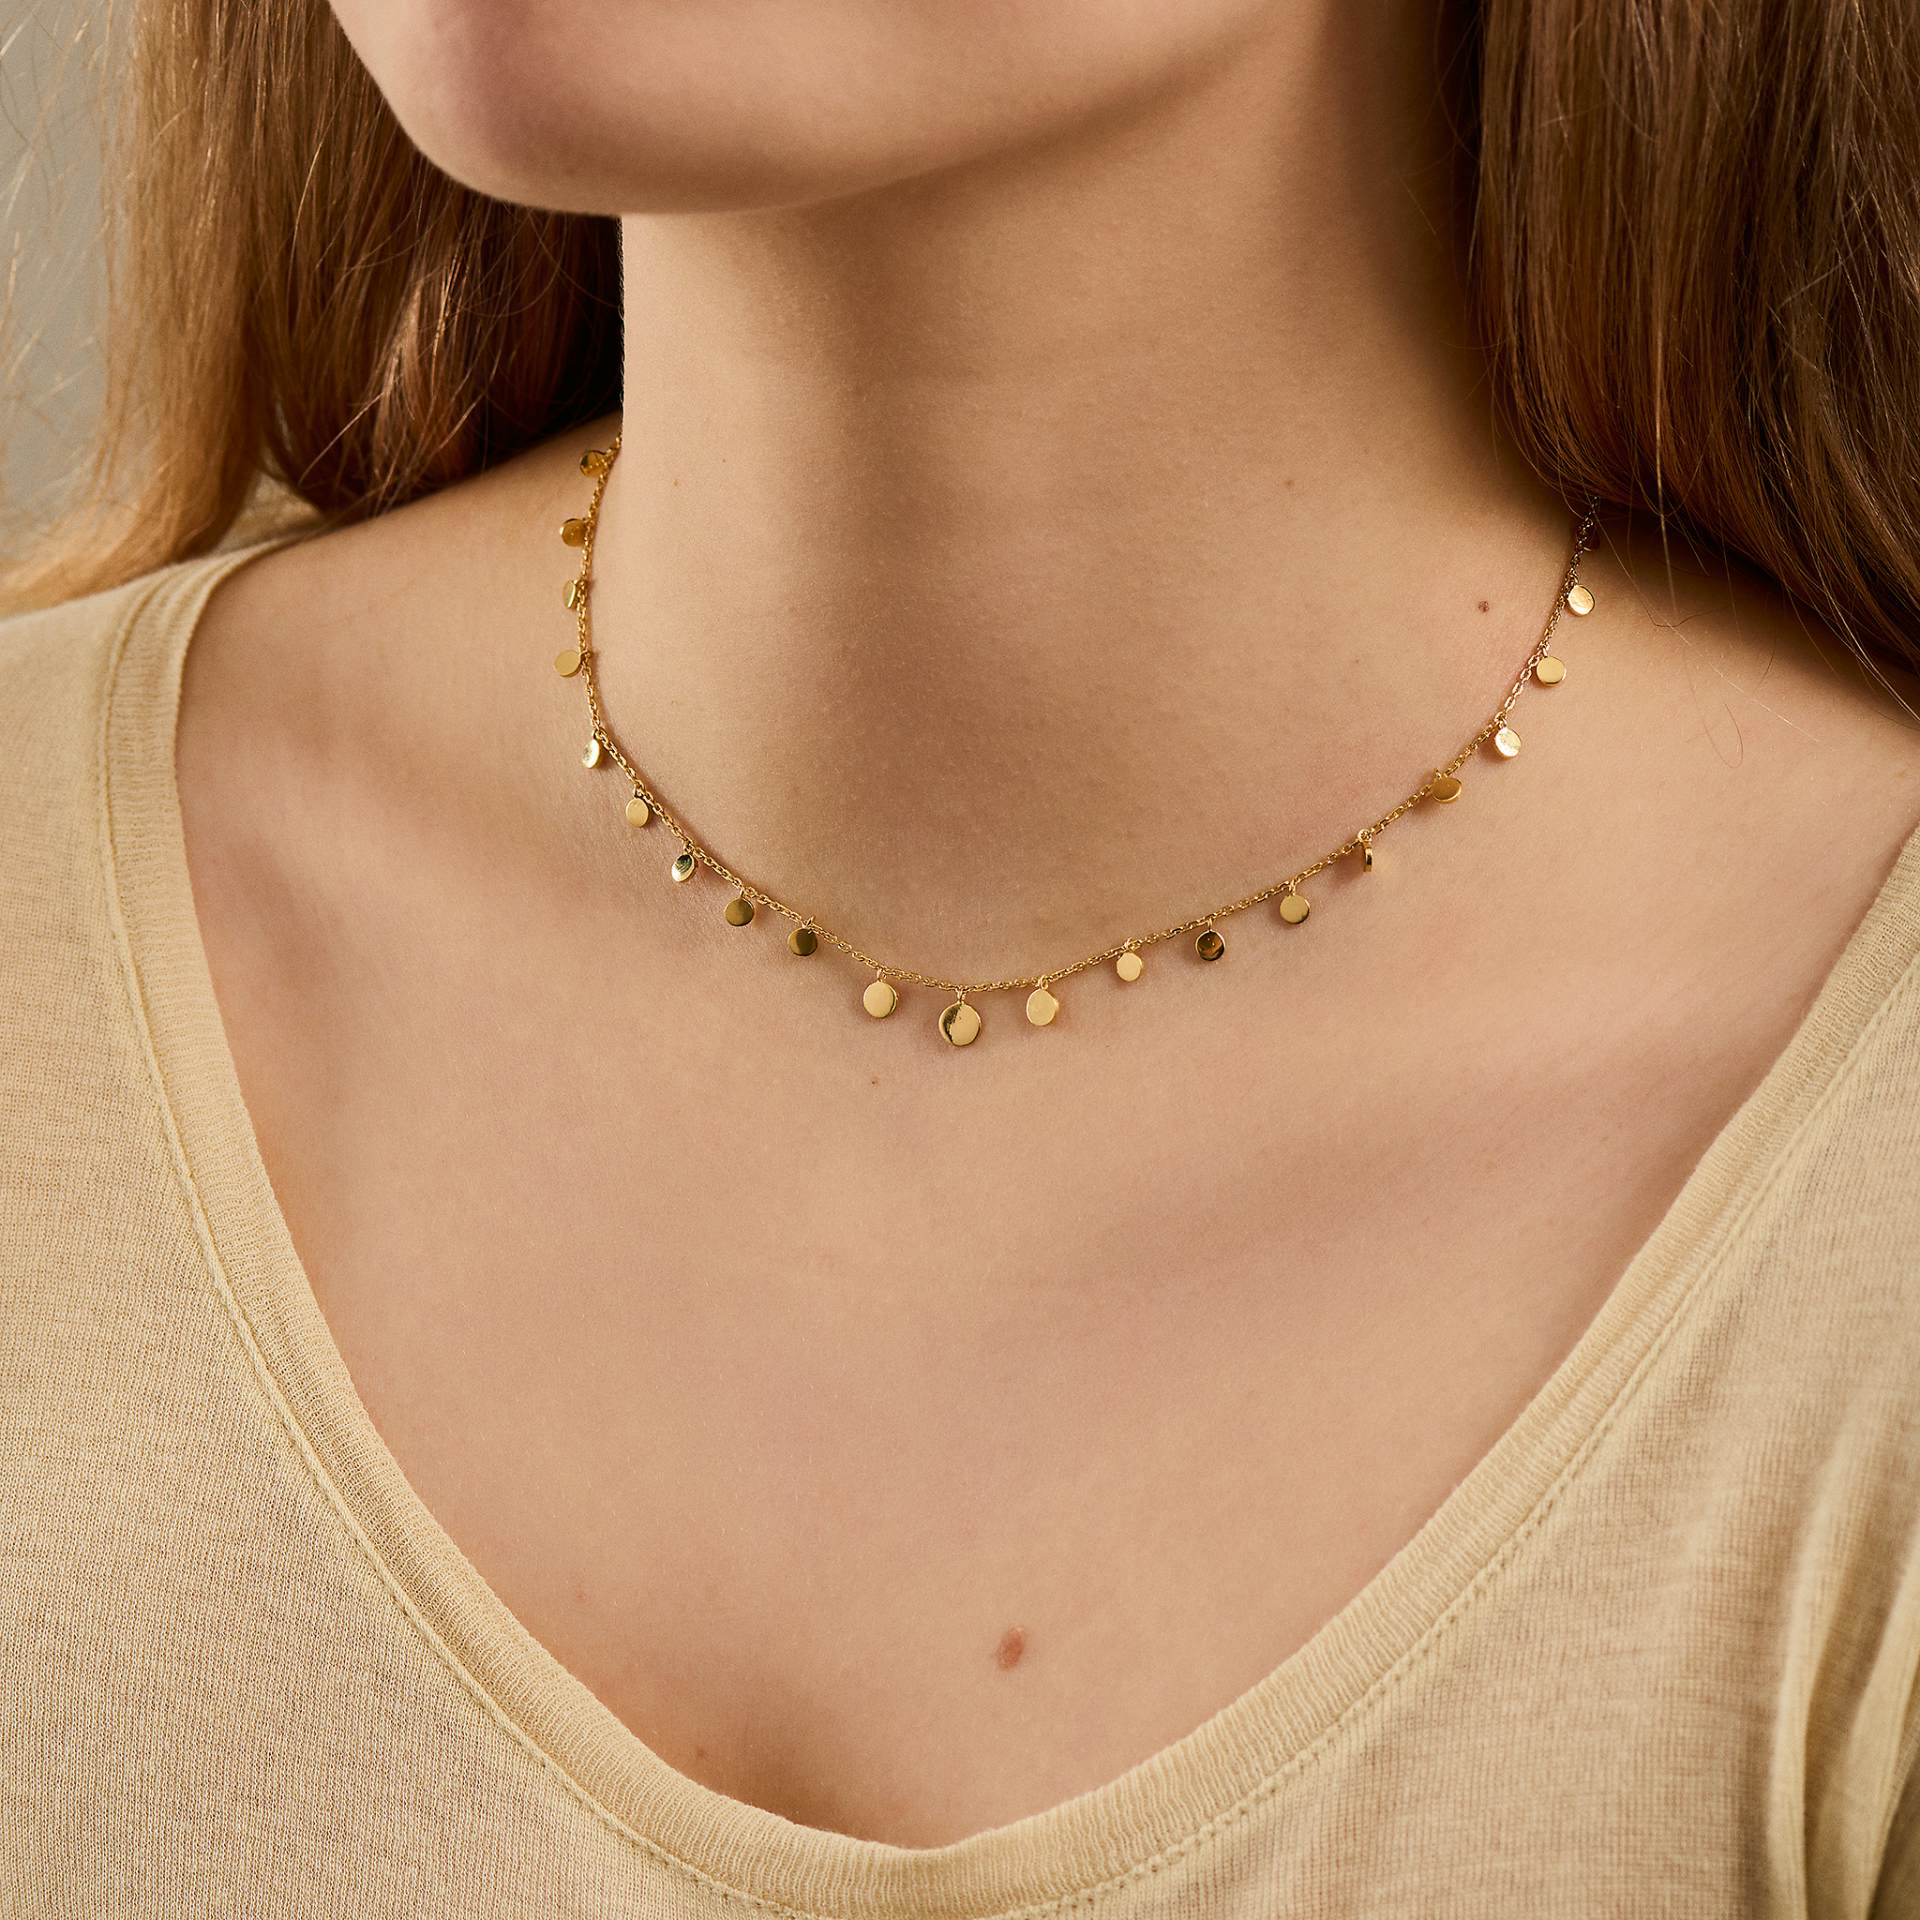 Sheen necklace von Pernille Corydon in Vergoldet-Silber Sterling 925